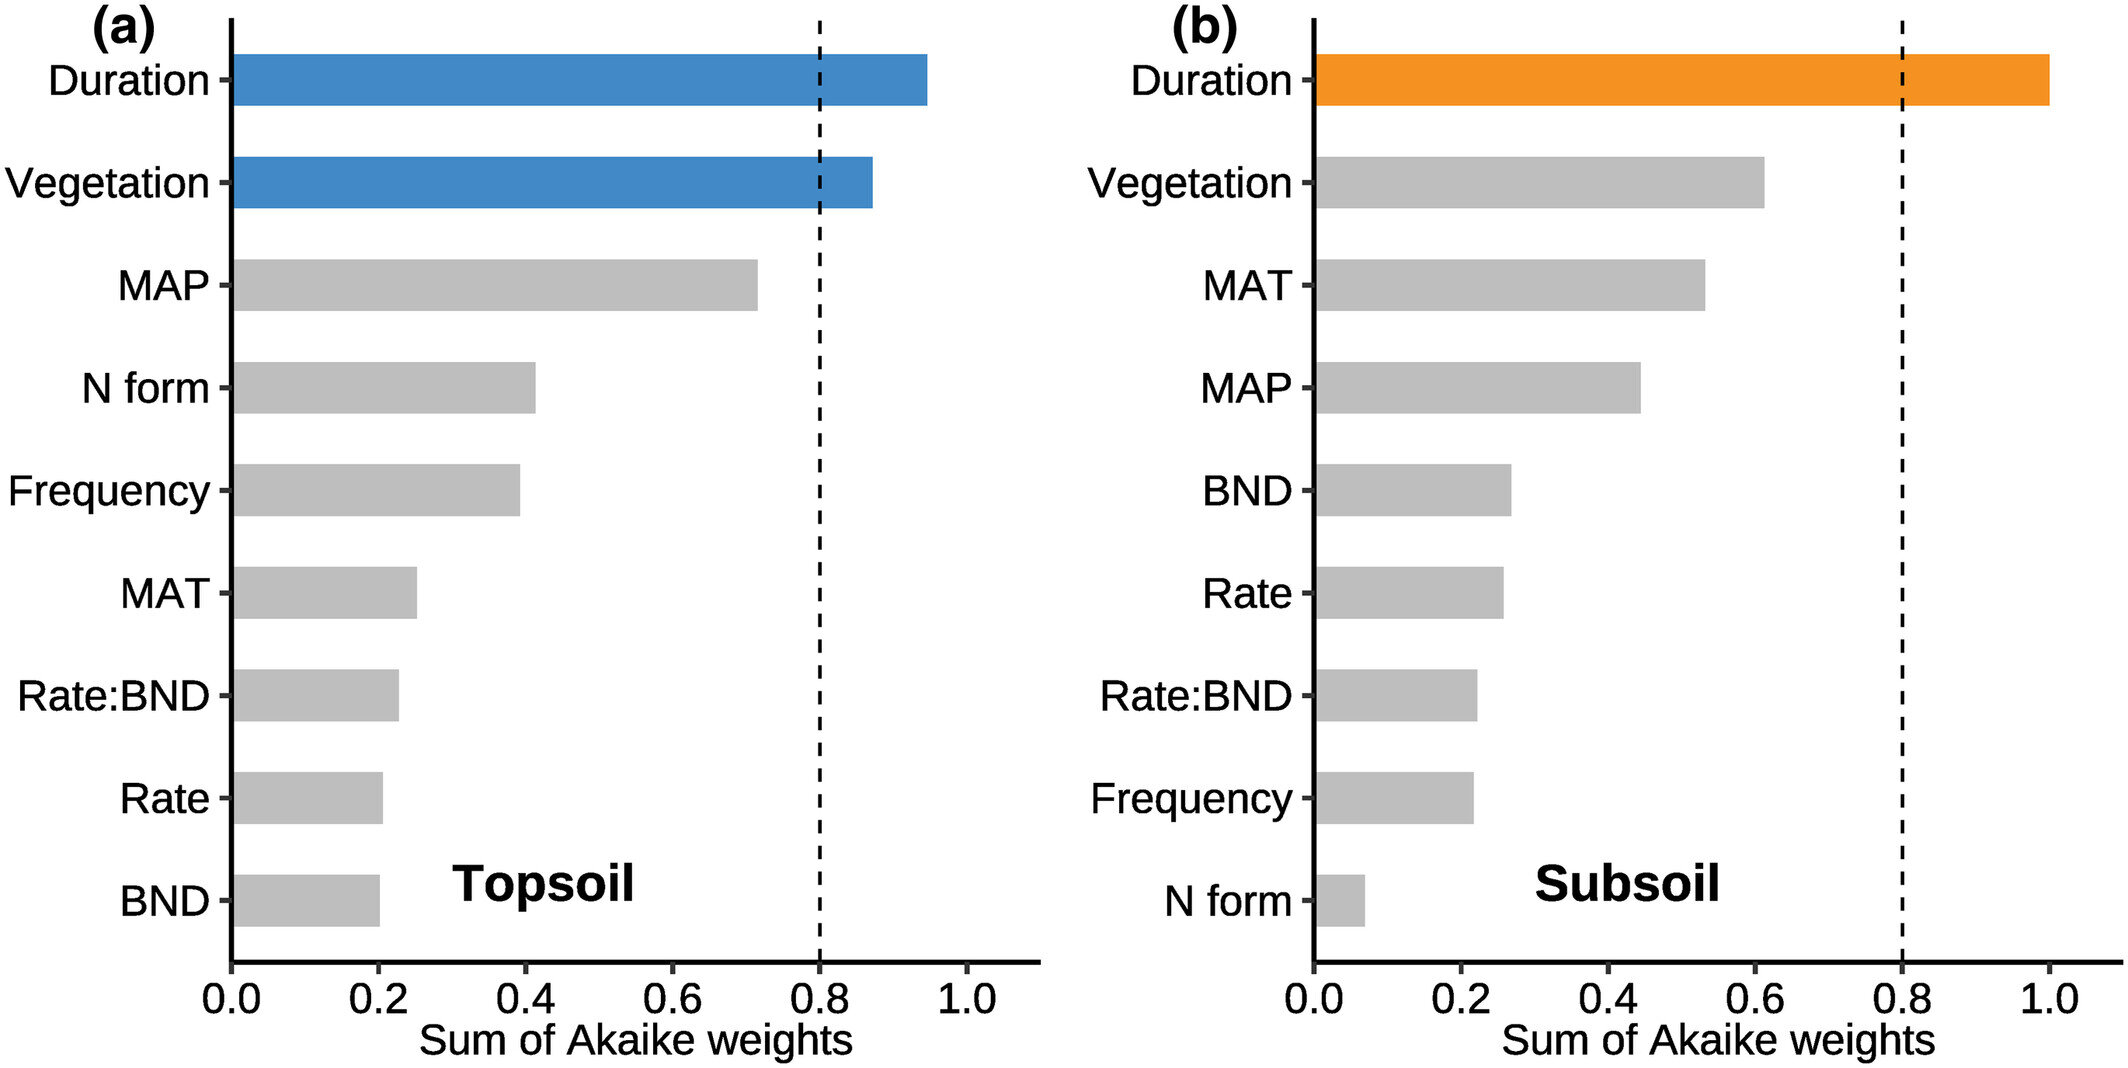 Researchers show depth-dependent responses of soil organic carbon under nitrogen deposition